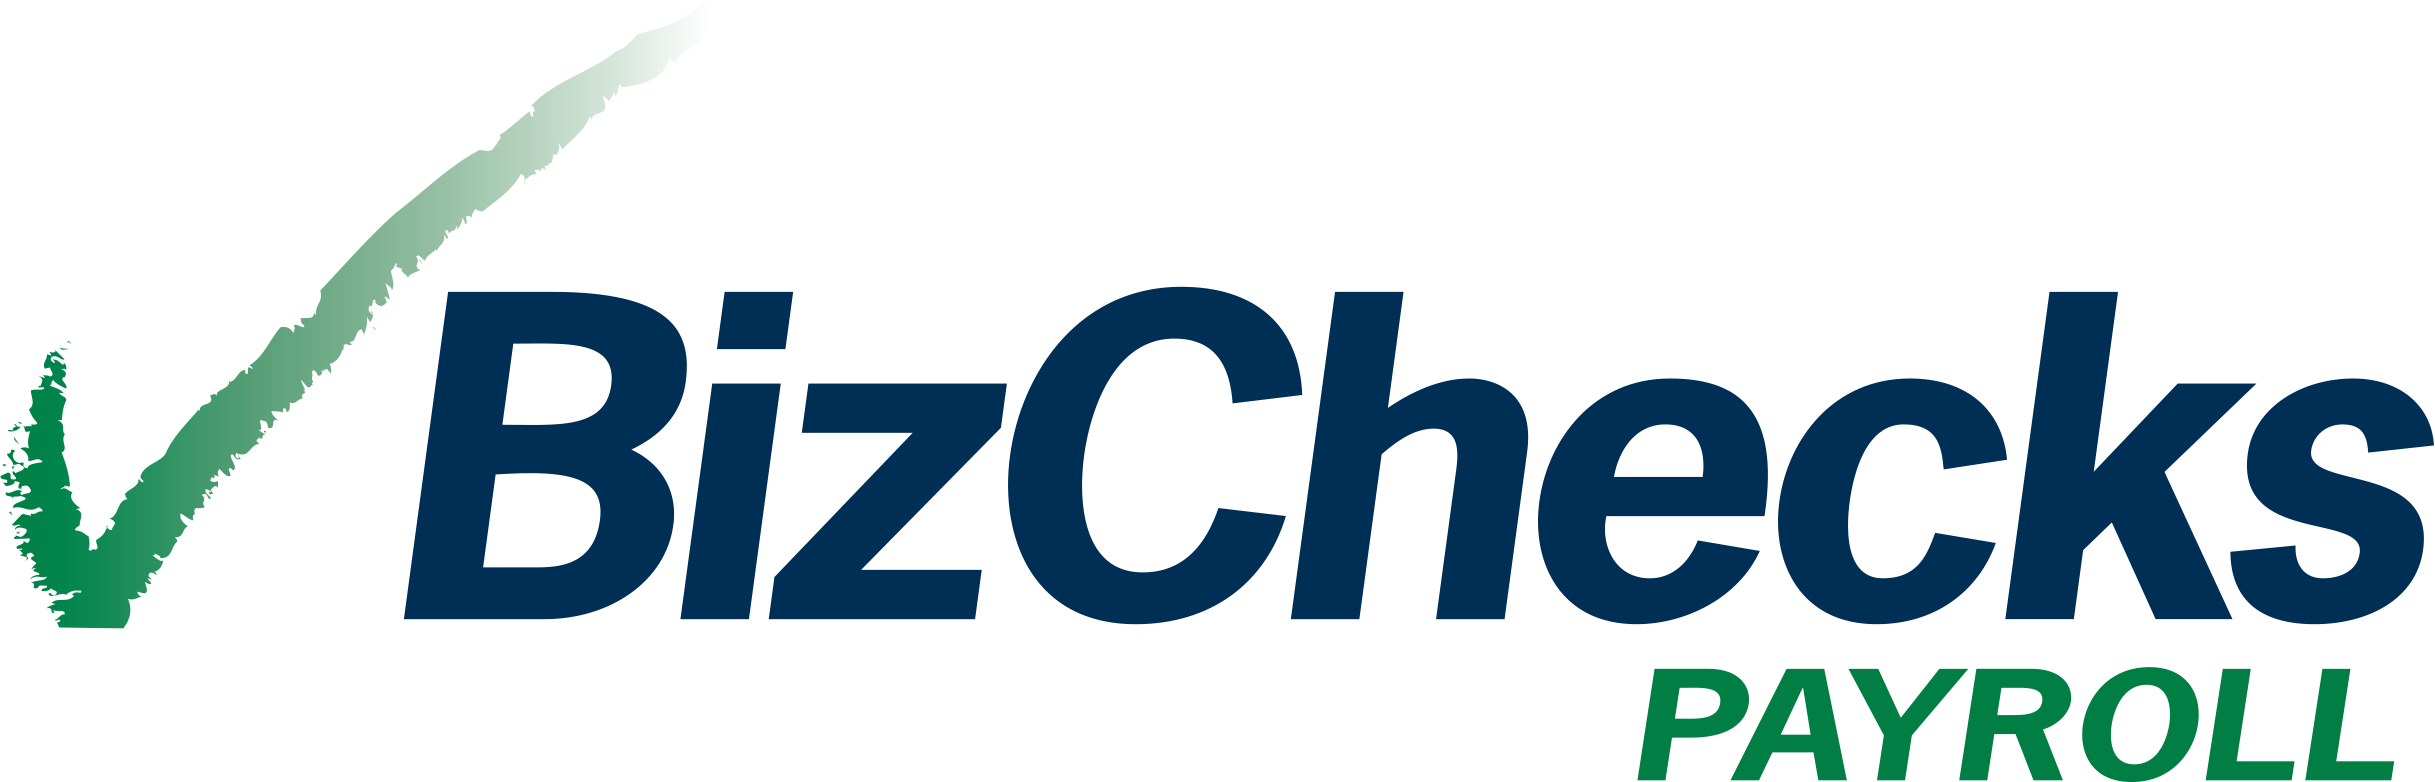 BizChecks Payroll logo